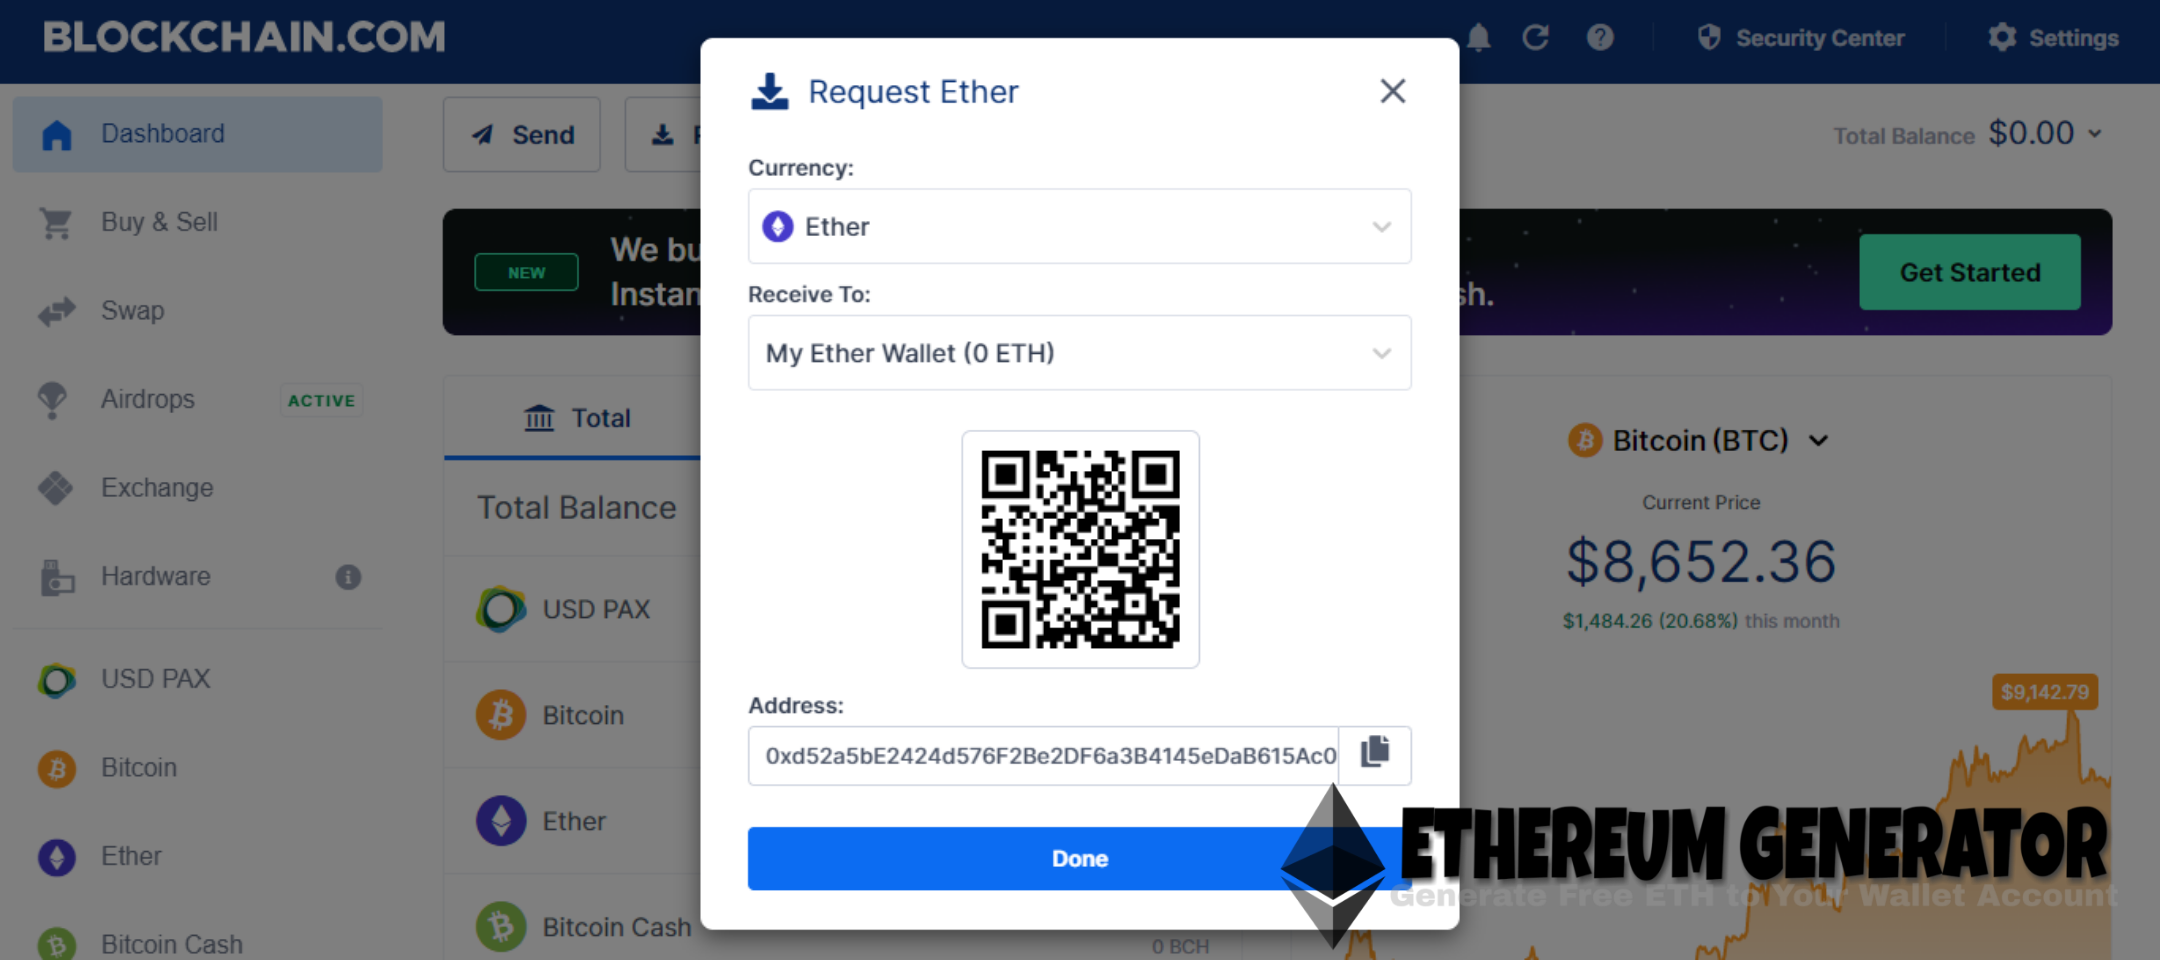  Ethereum Wallet Address